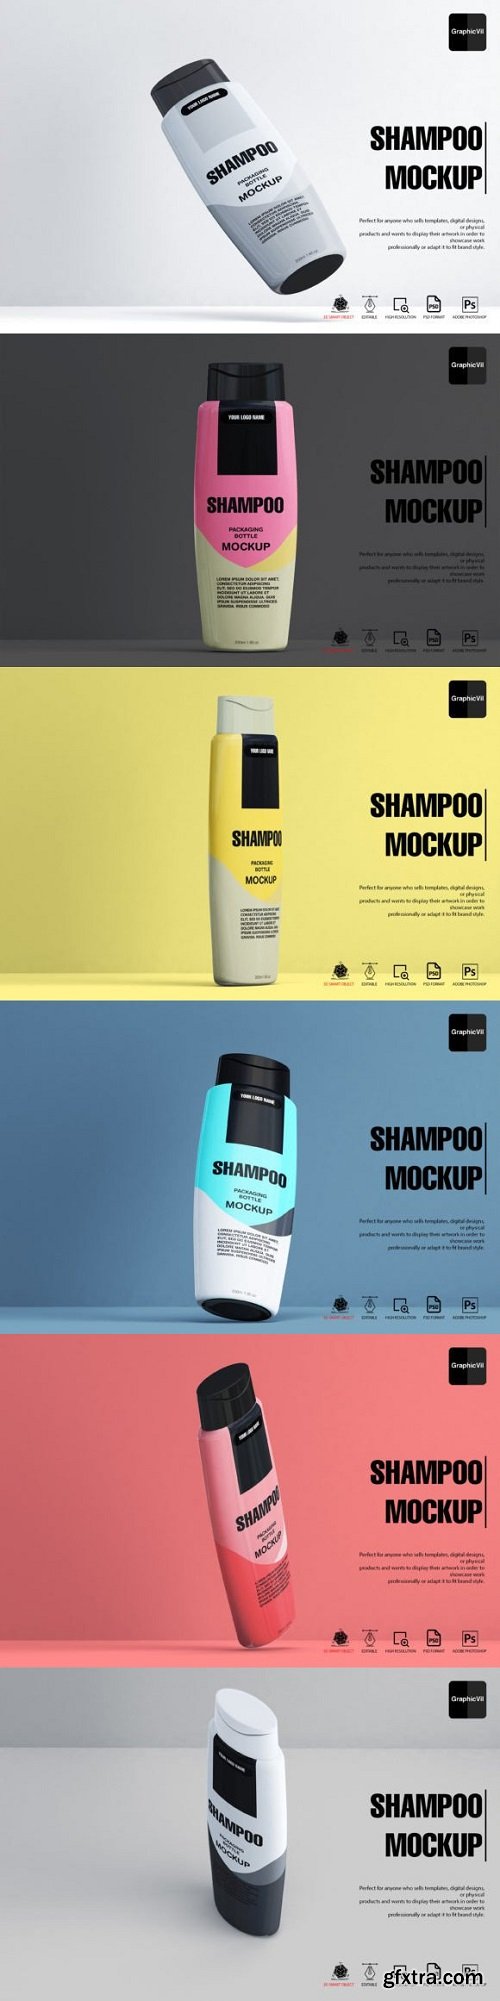 Shampoo Mockup